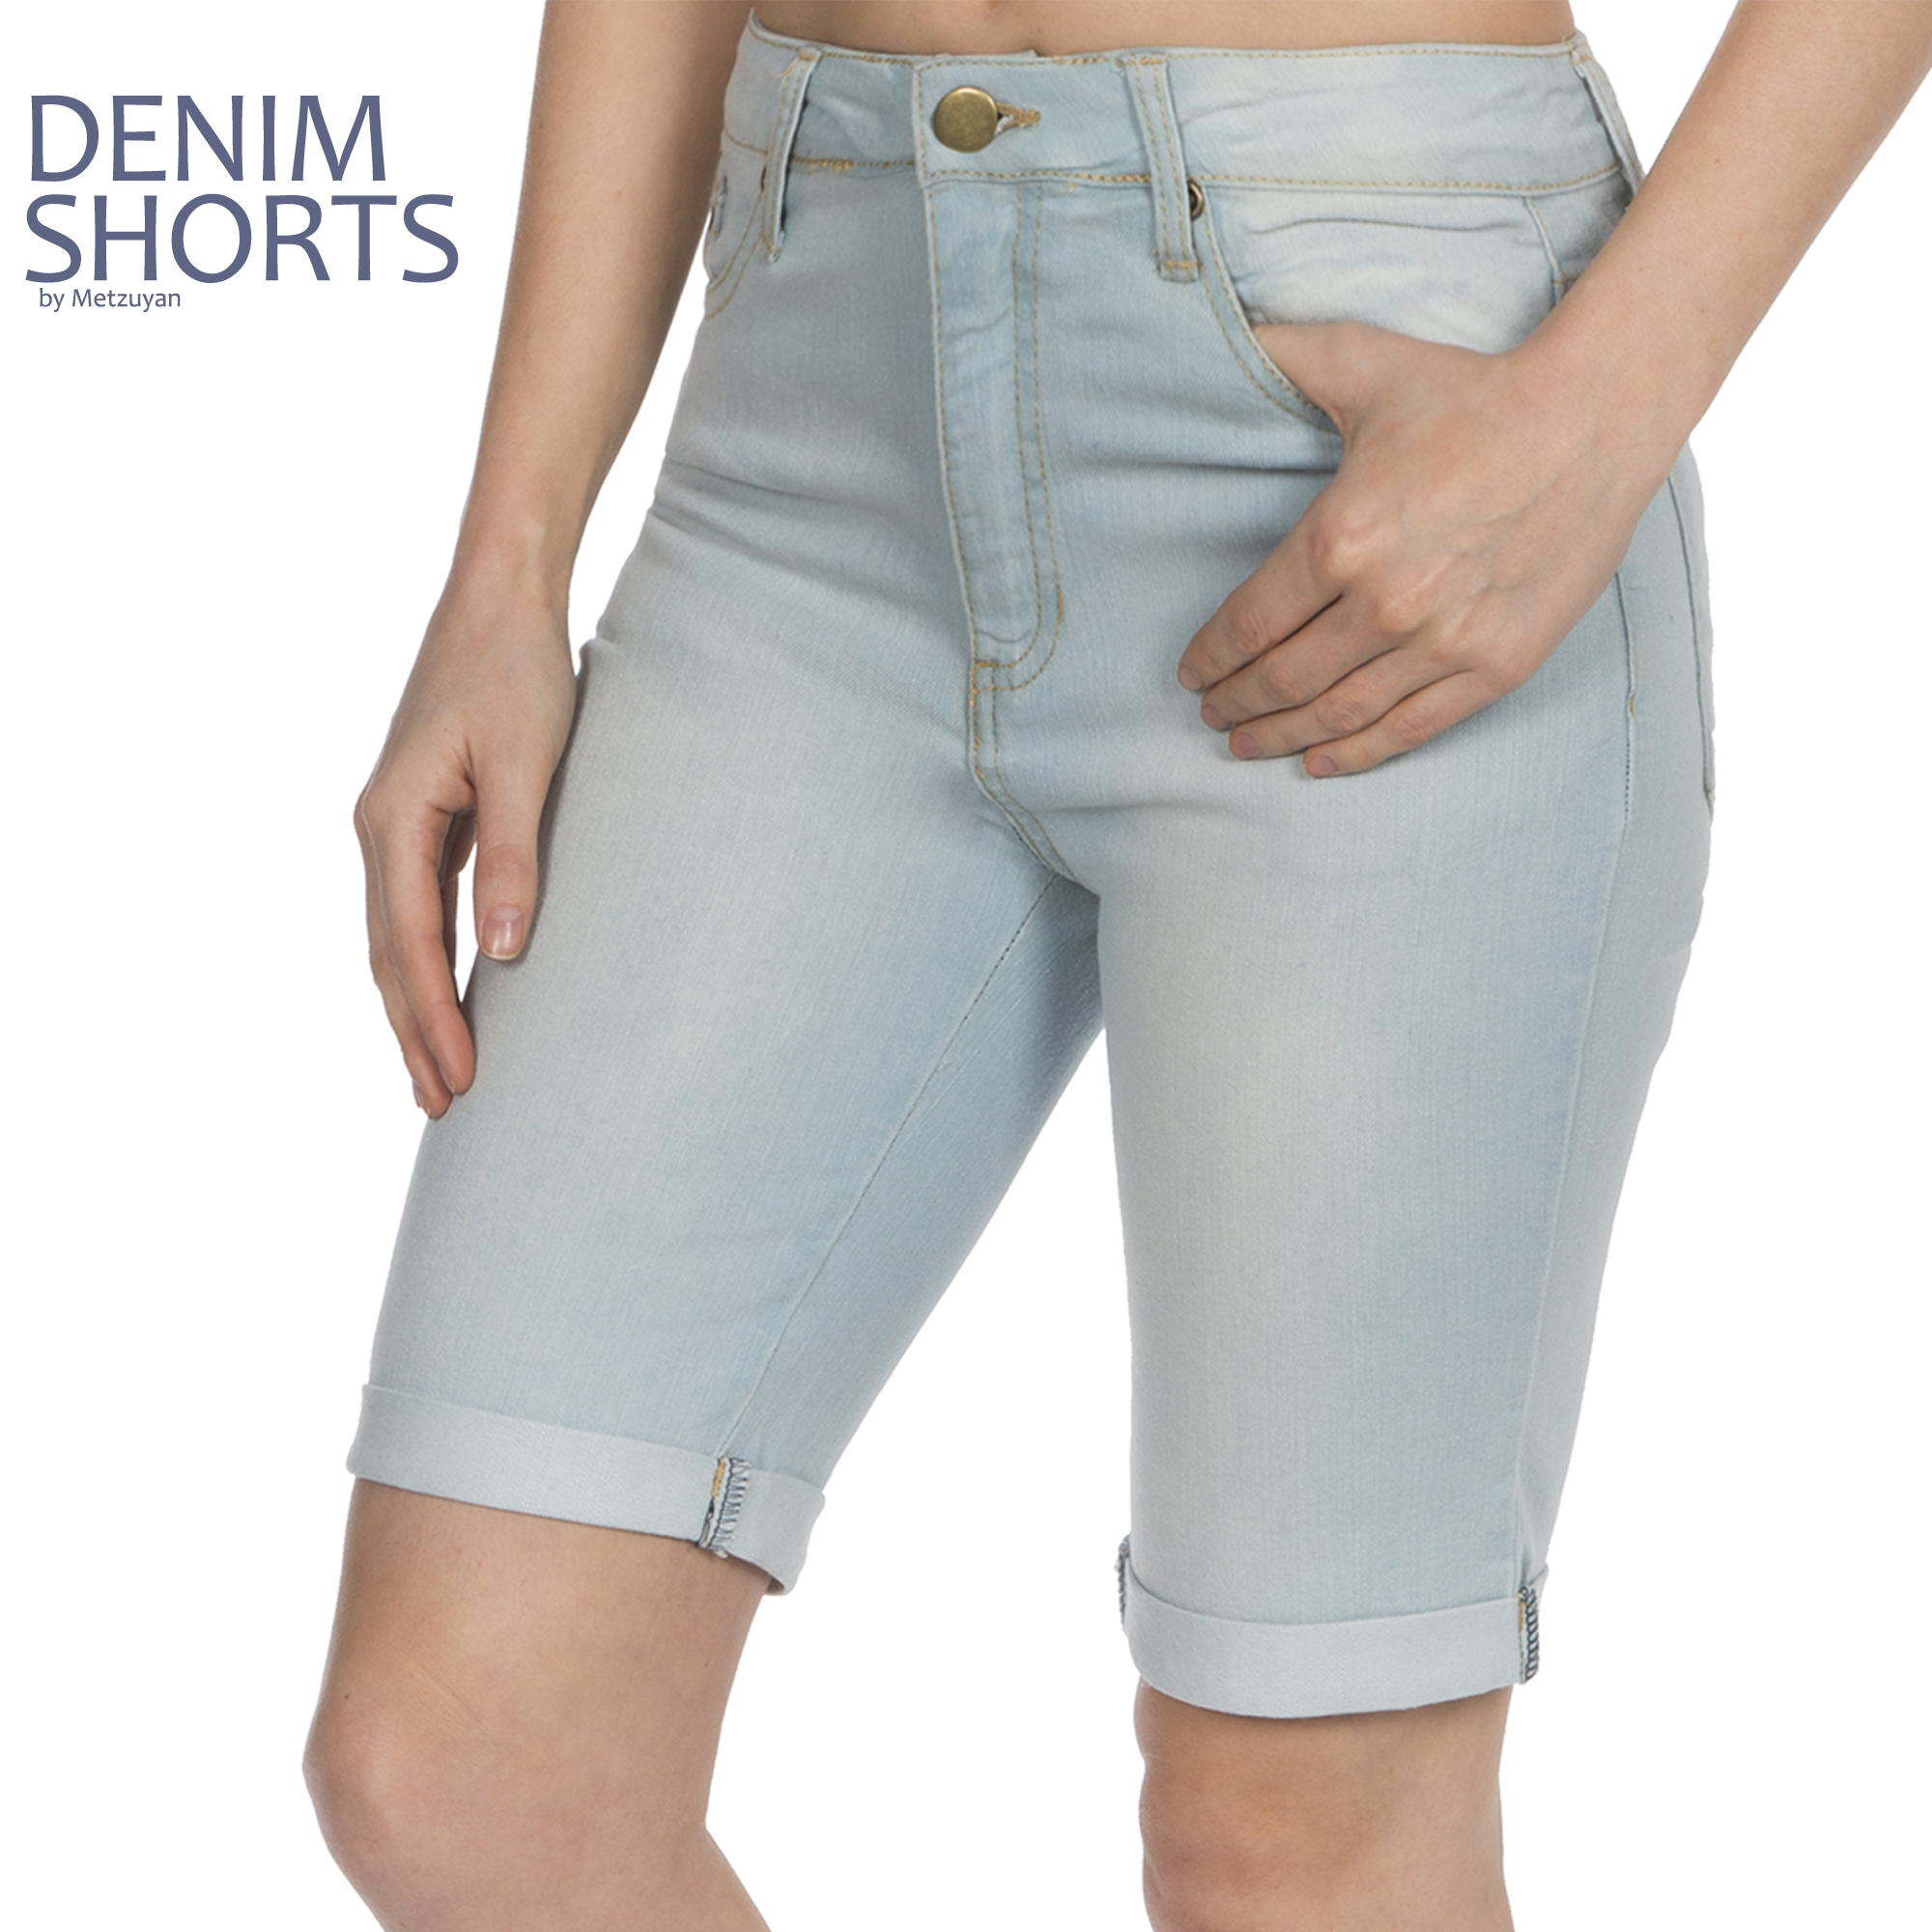 denim shorts ladies uk